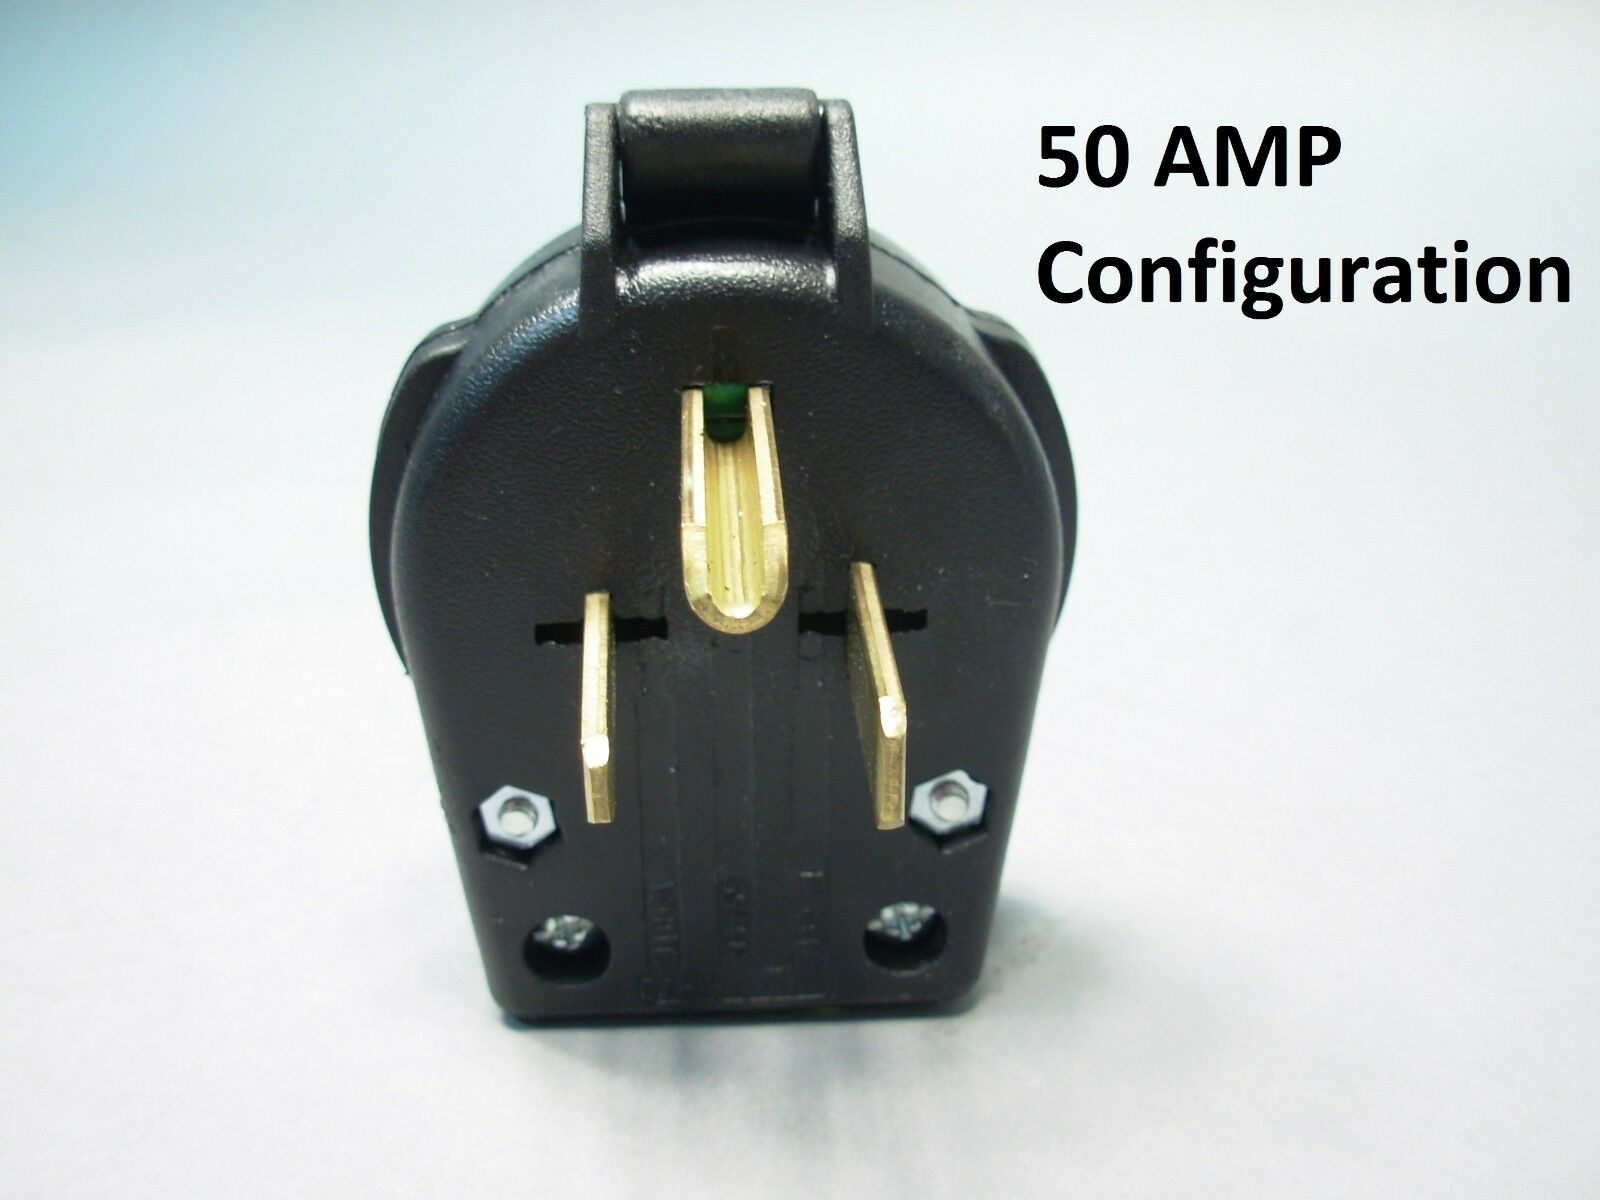 Welder Plug 50 Amp Male Nema 6-30p 6-50p Genuine Cooper Not Chinese Import